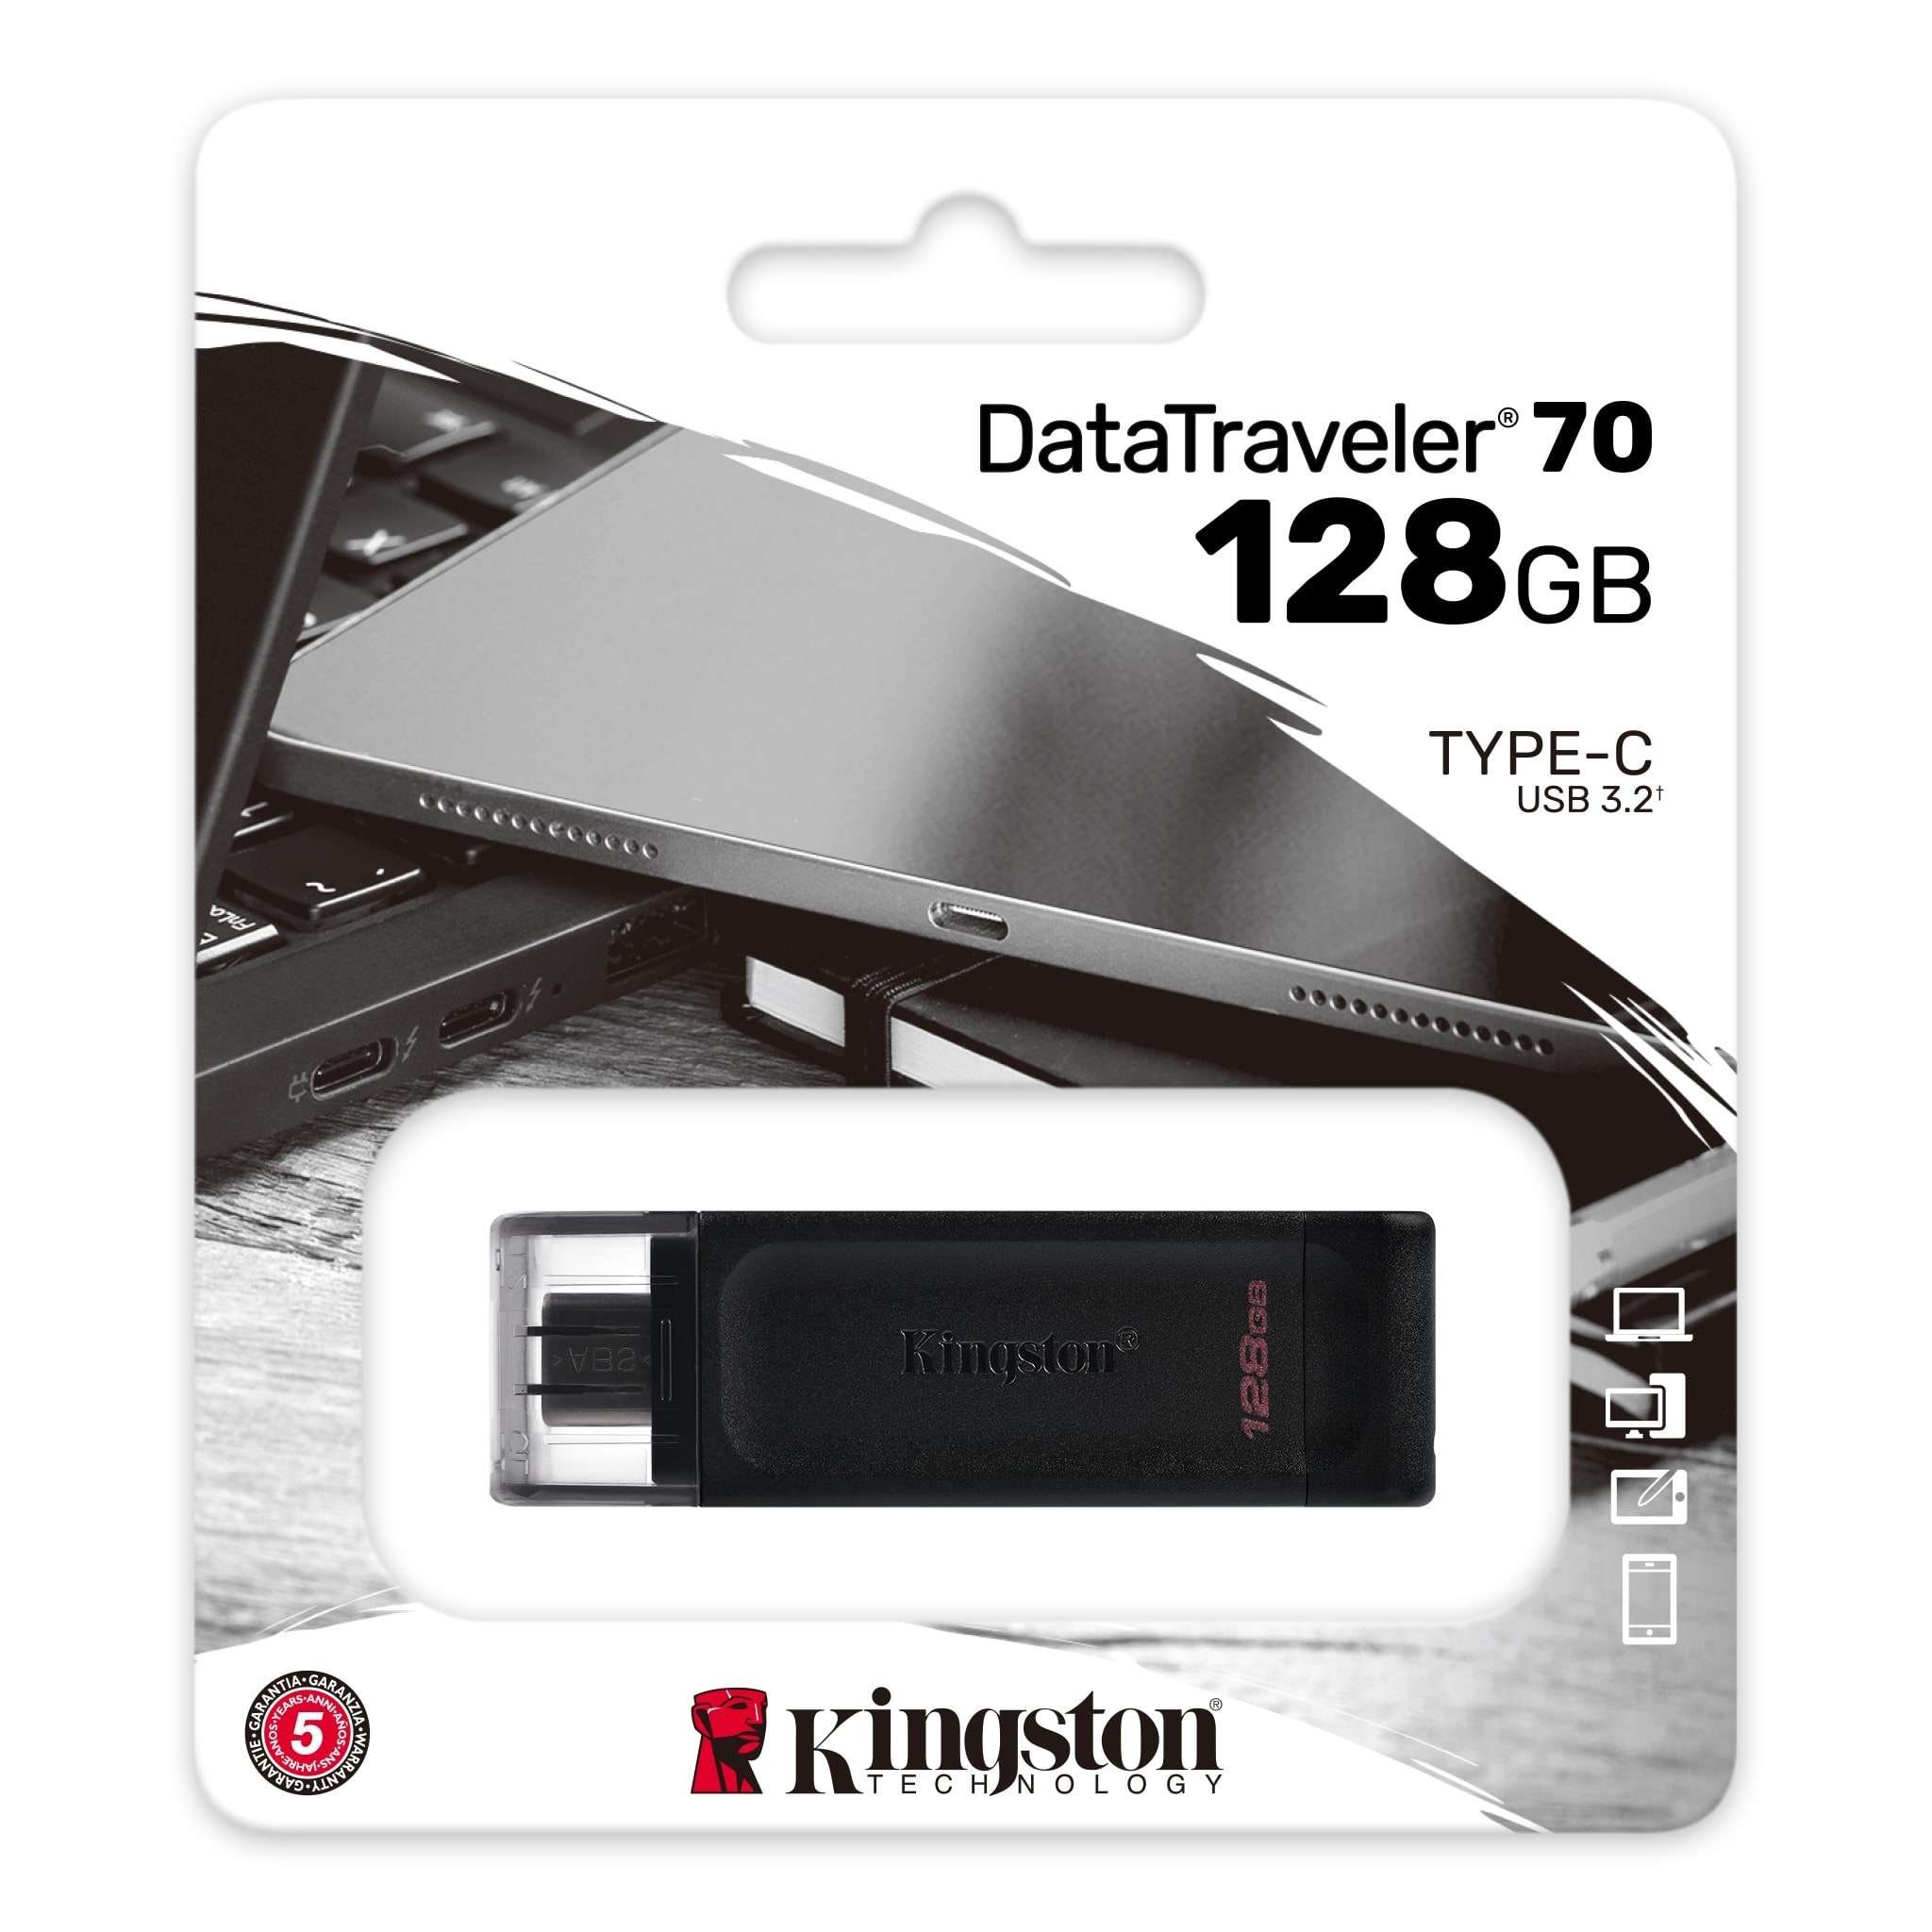 DataTraveler 70 USB-C Flash Drive - 128GB - Campus Computer Store